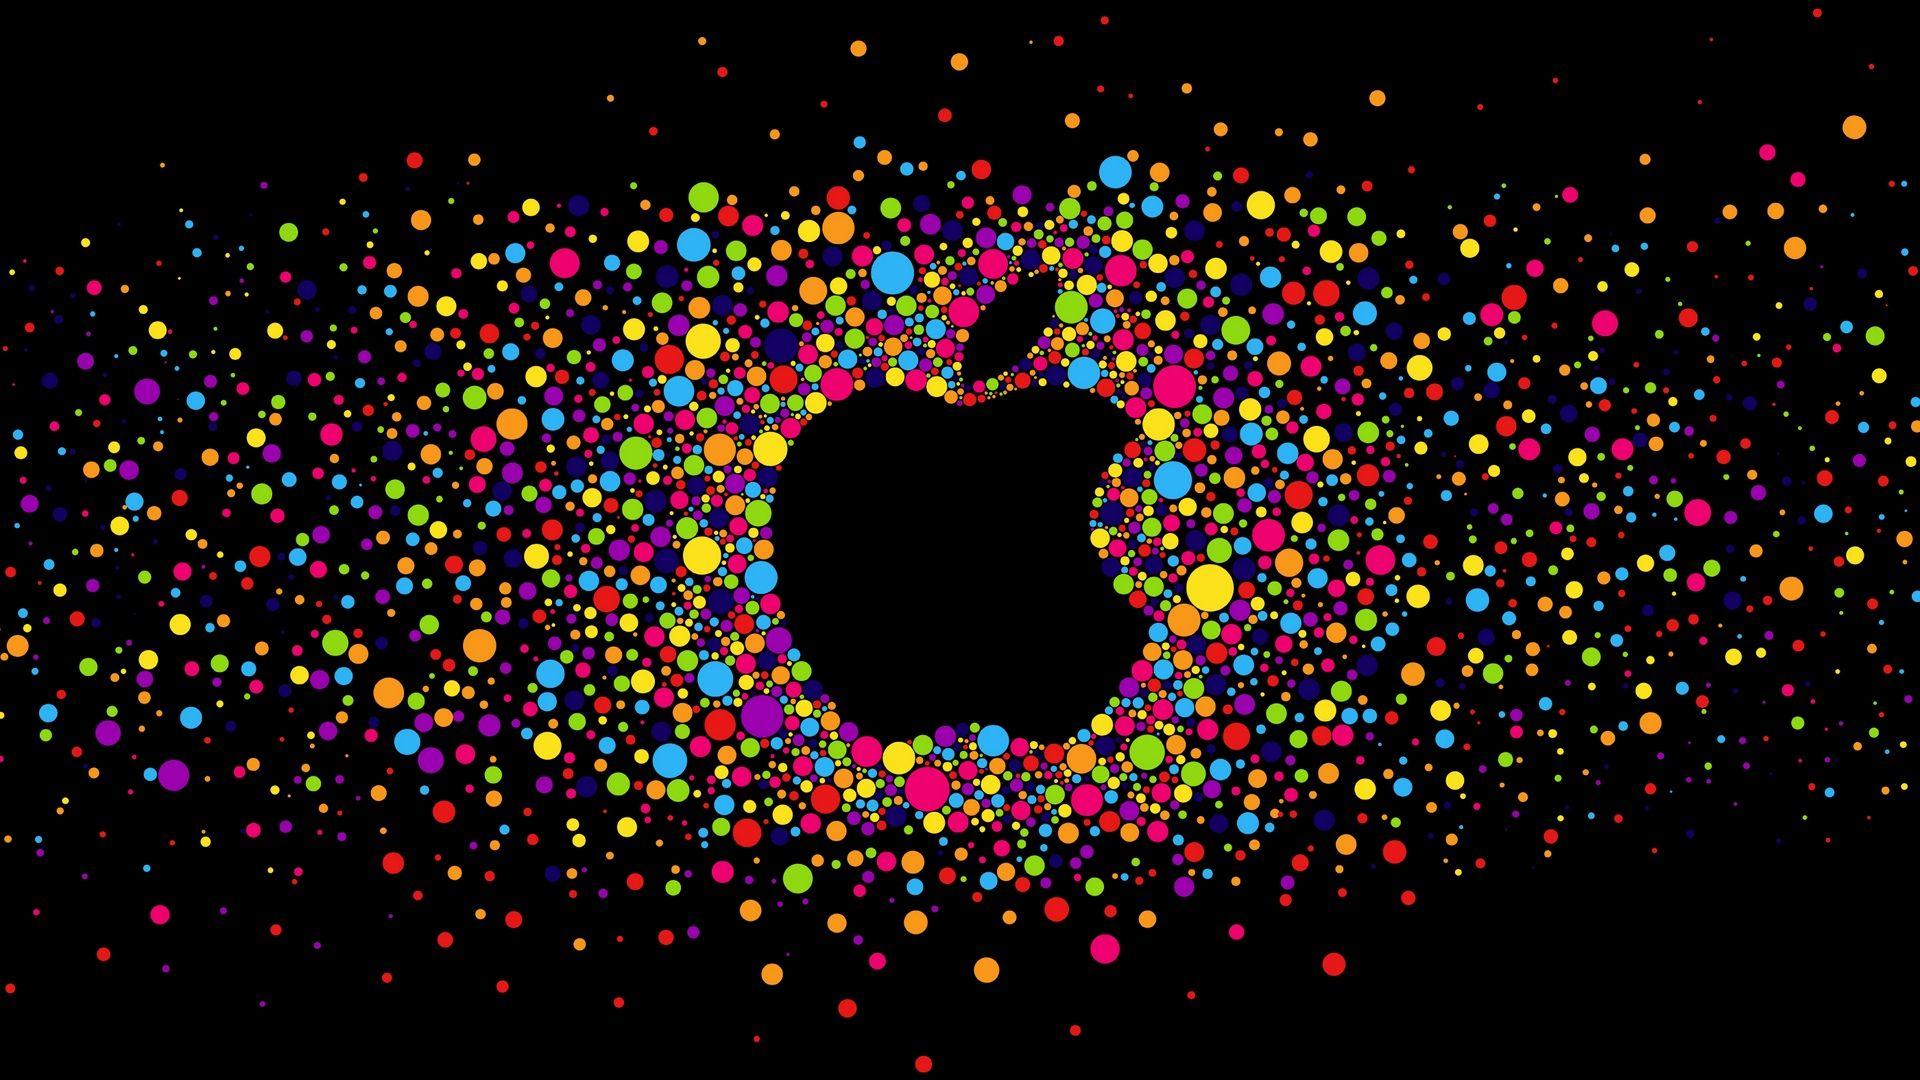 Black Apple Logo Wallpapers Top Free Black Apple Logo Backgrounds Wallpaperaccess